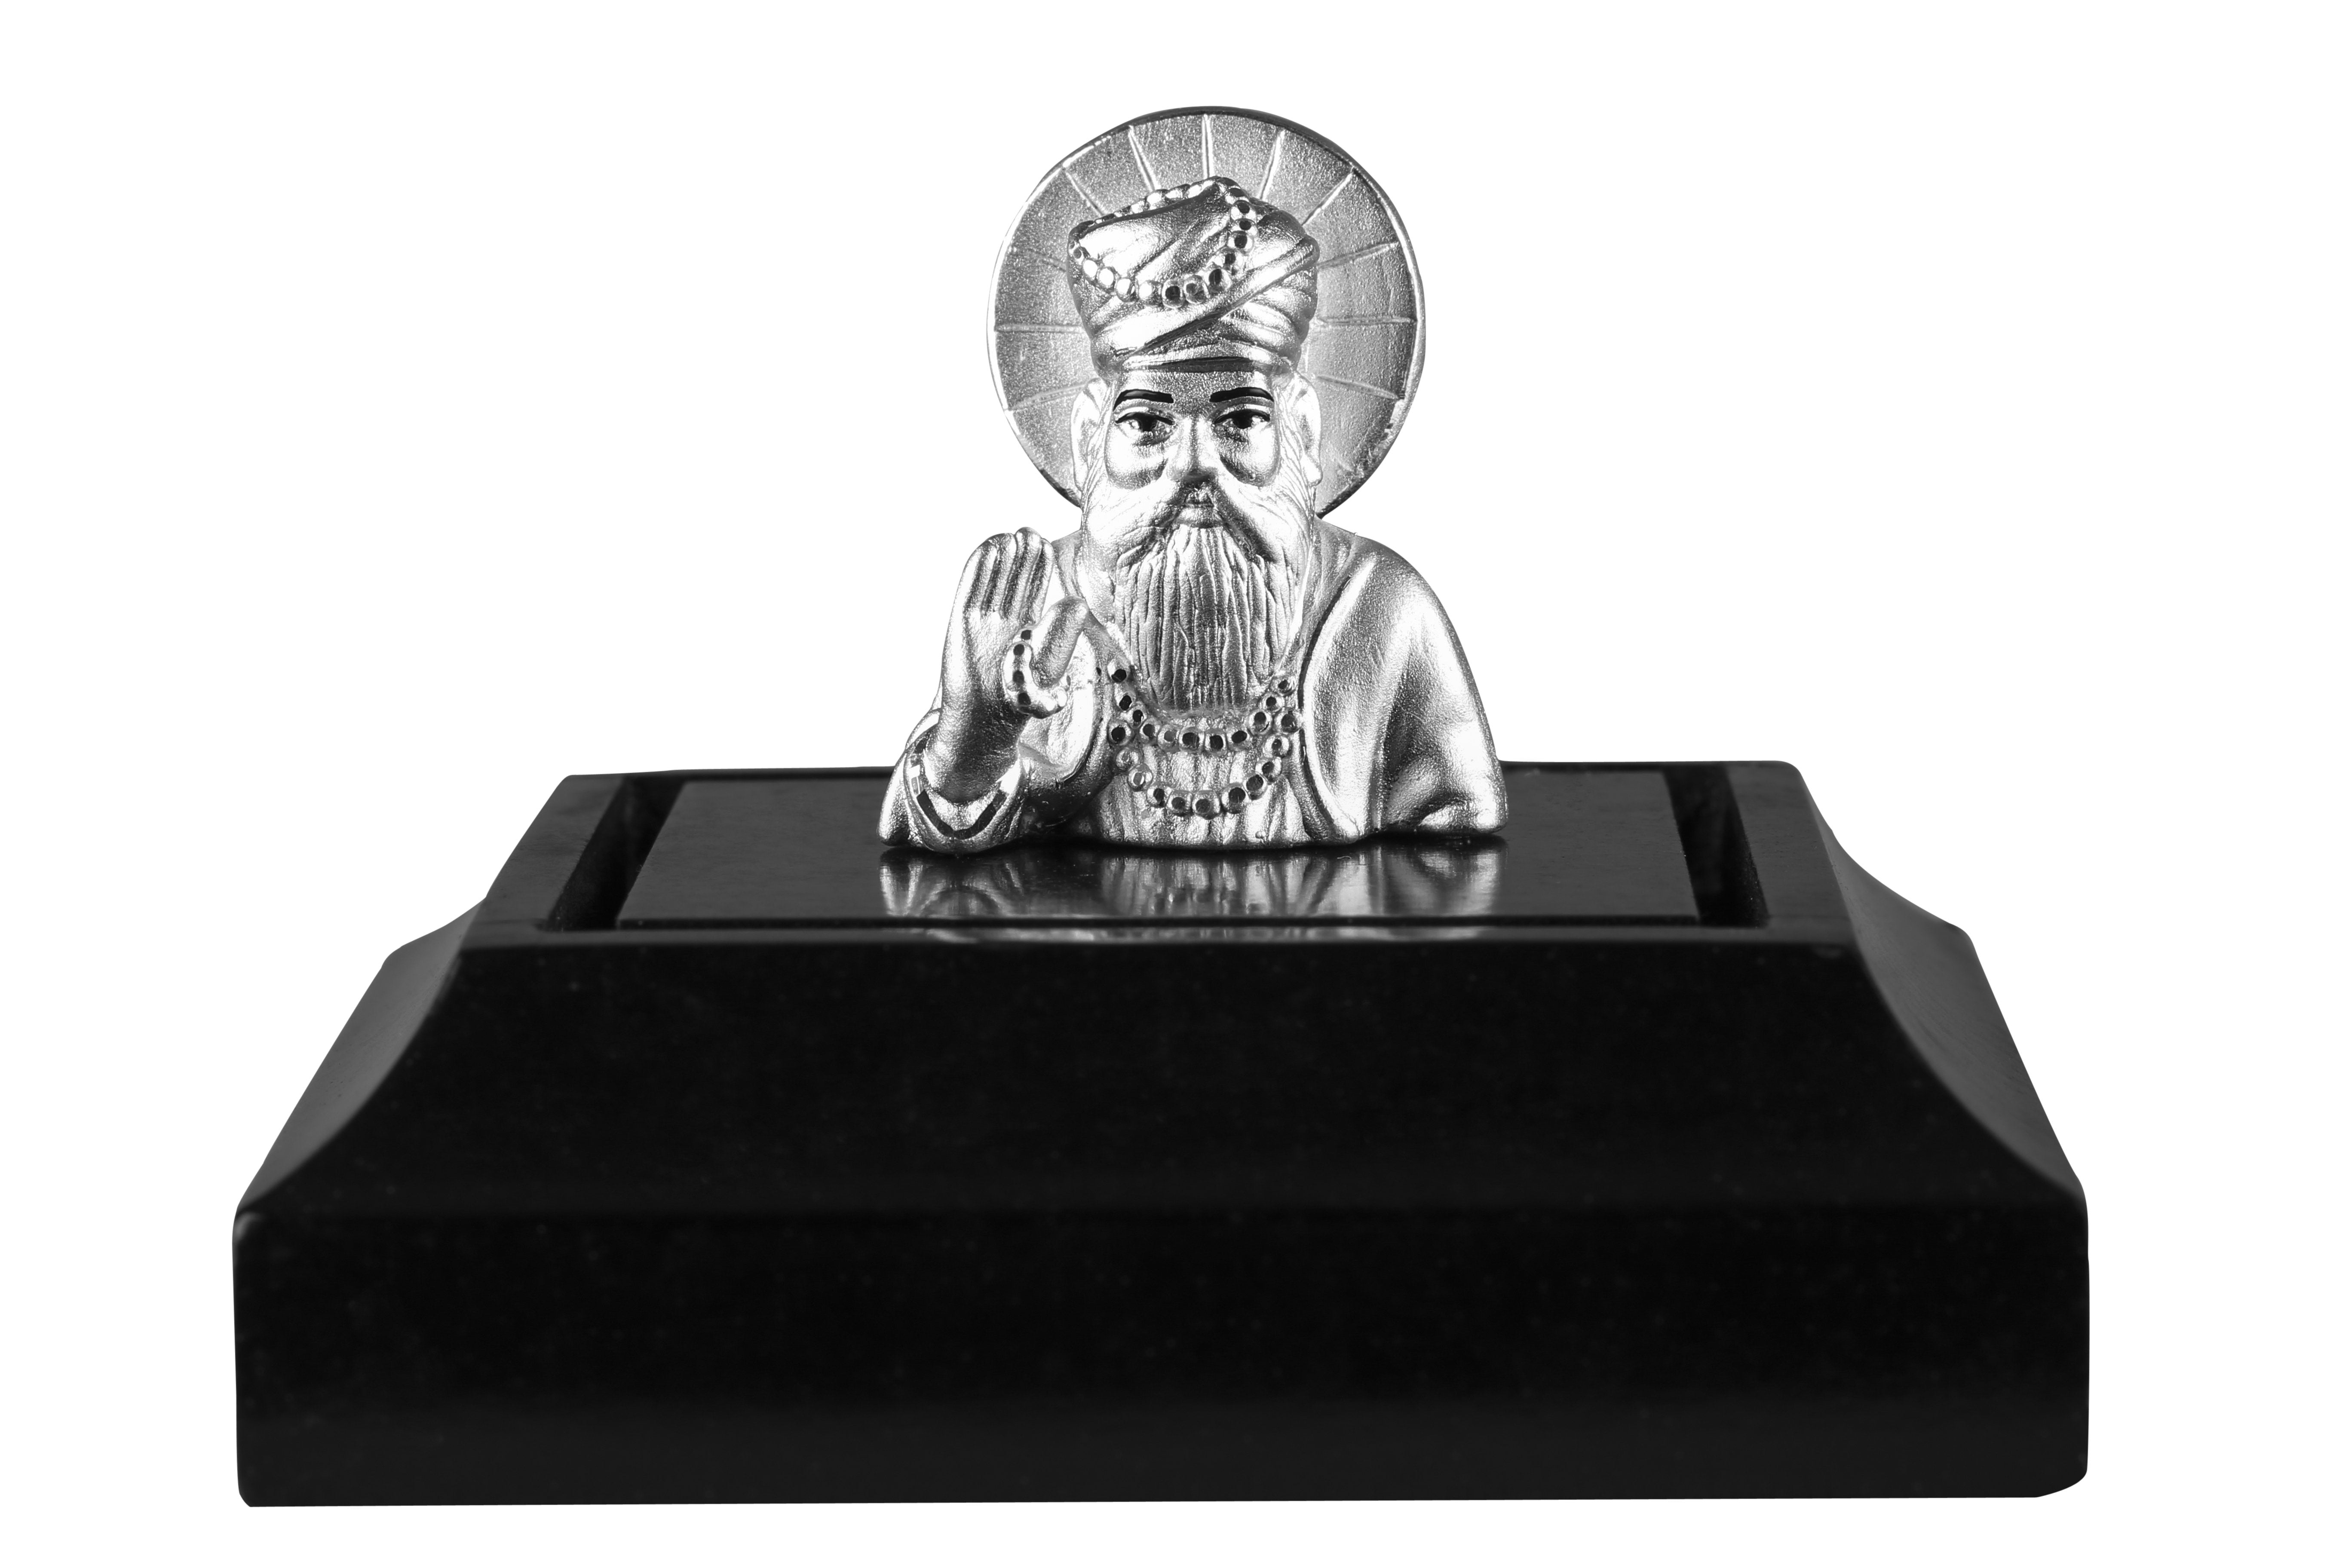 999 Pure Silver Guru Nanak Idol By Krysaliis Isvara Idols